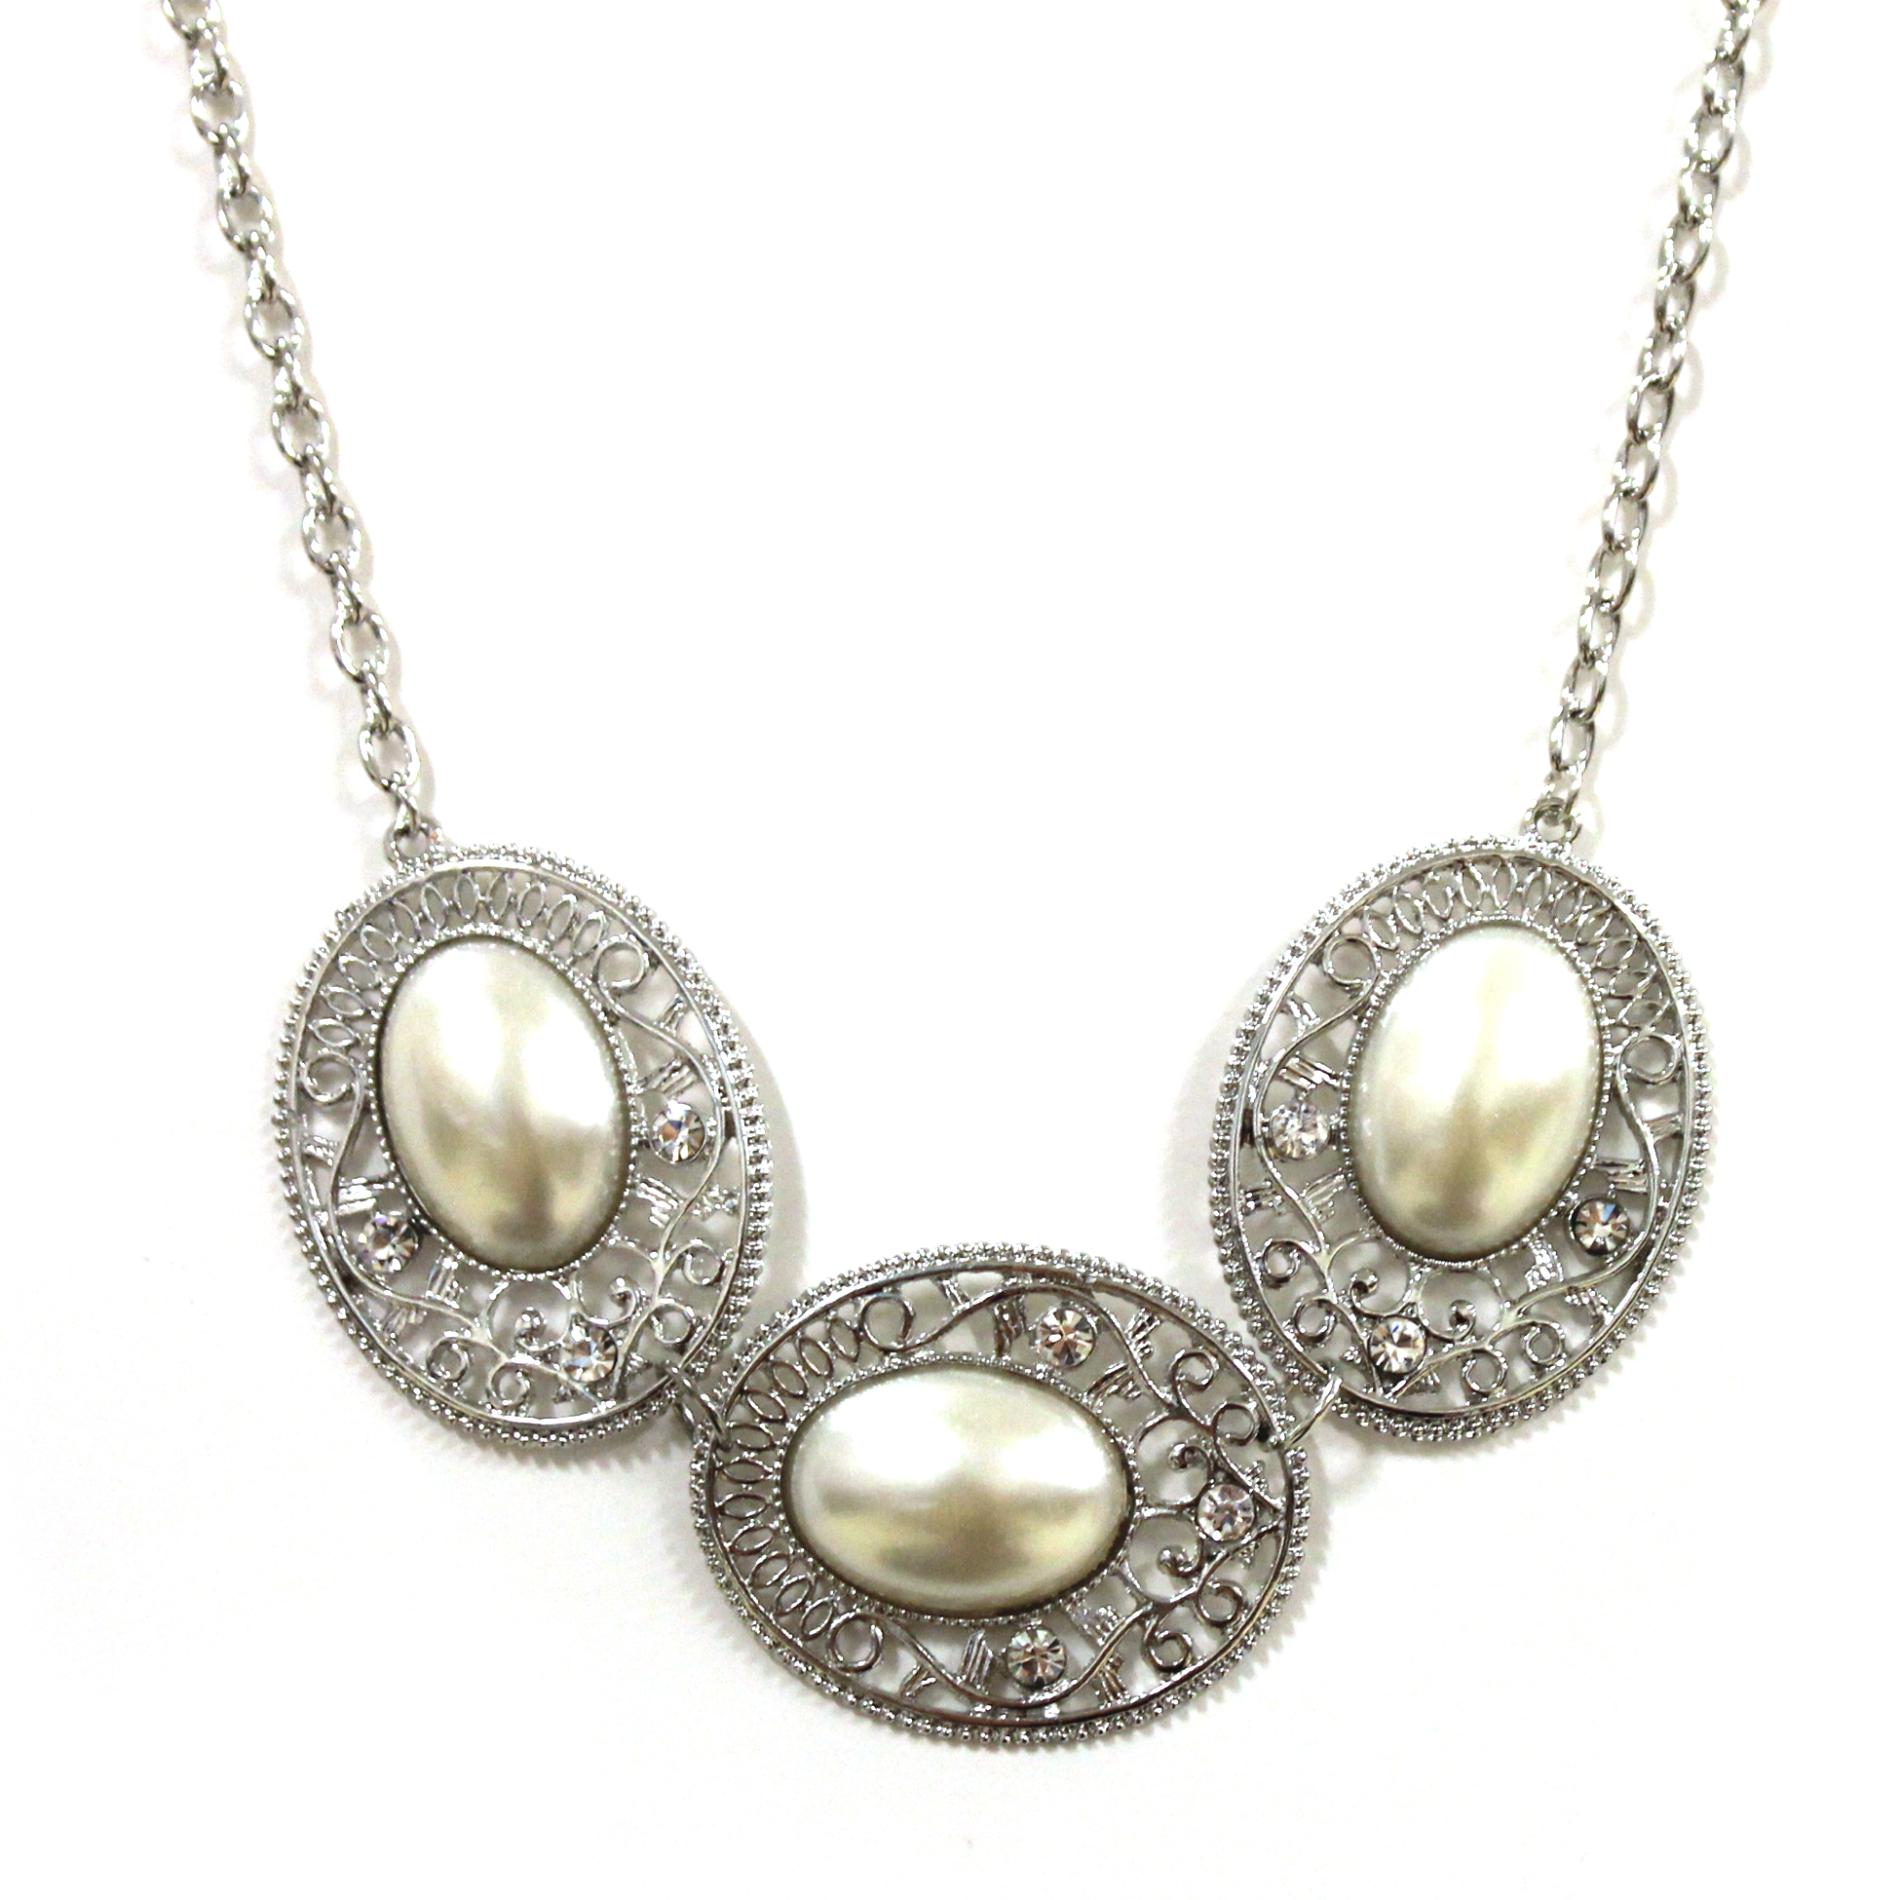 Accessories Women's Faux Pearl Filigree Necklace